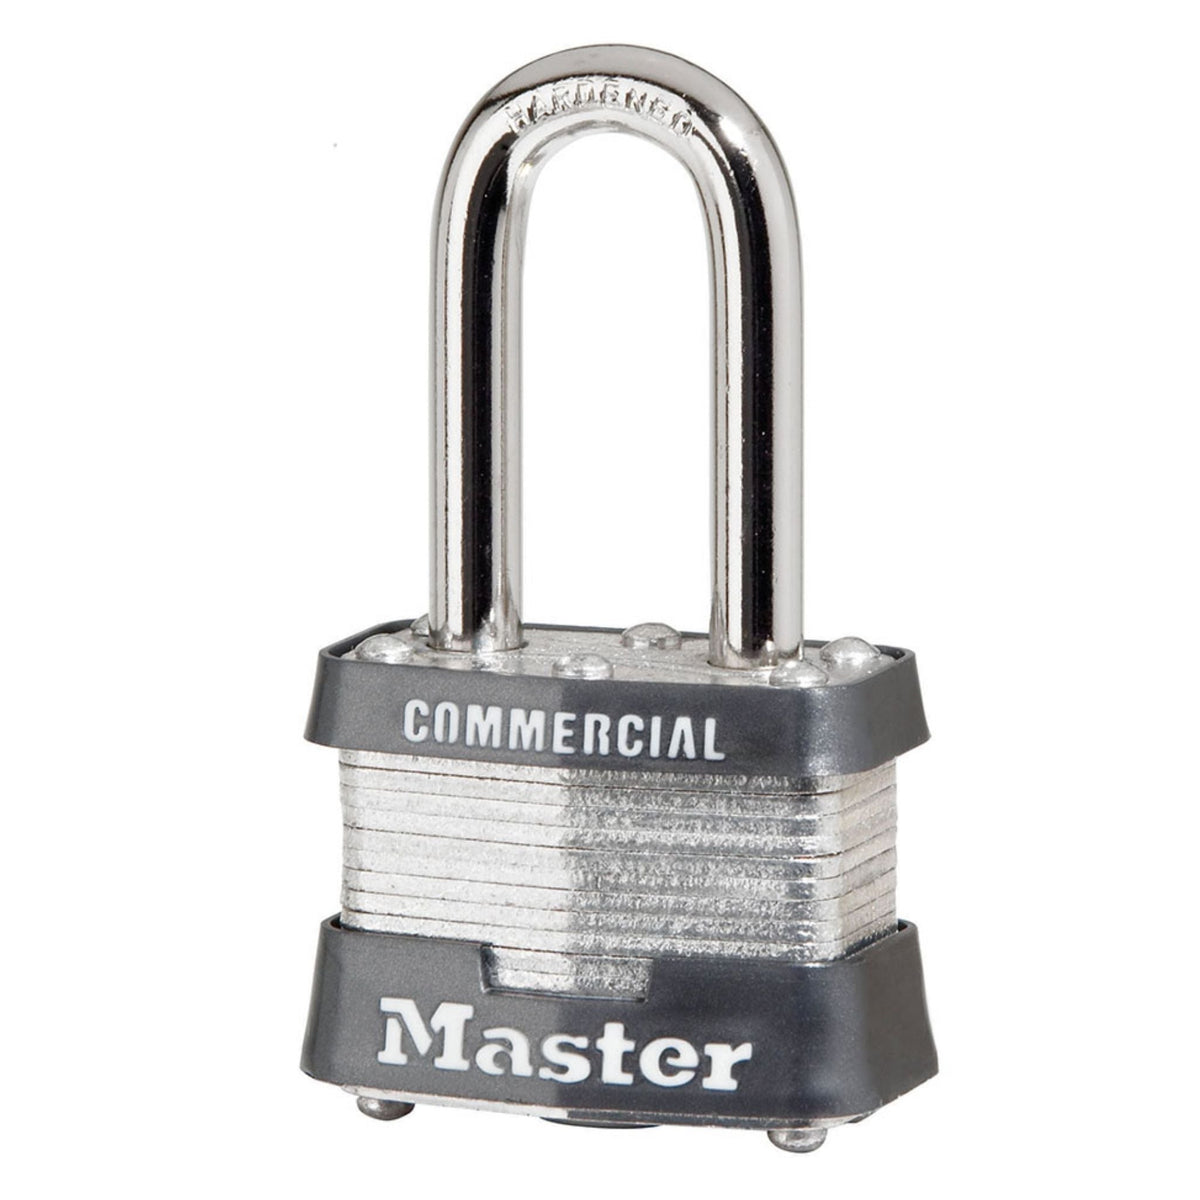 Master Lock 3KALF 3822 Laminated Steel Locks Keyed Alike to Match Key Number KA3822 with 1.5-Inch Shackle - The Lock Source